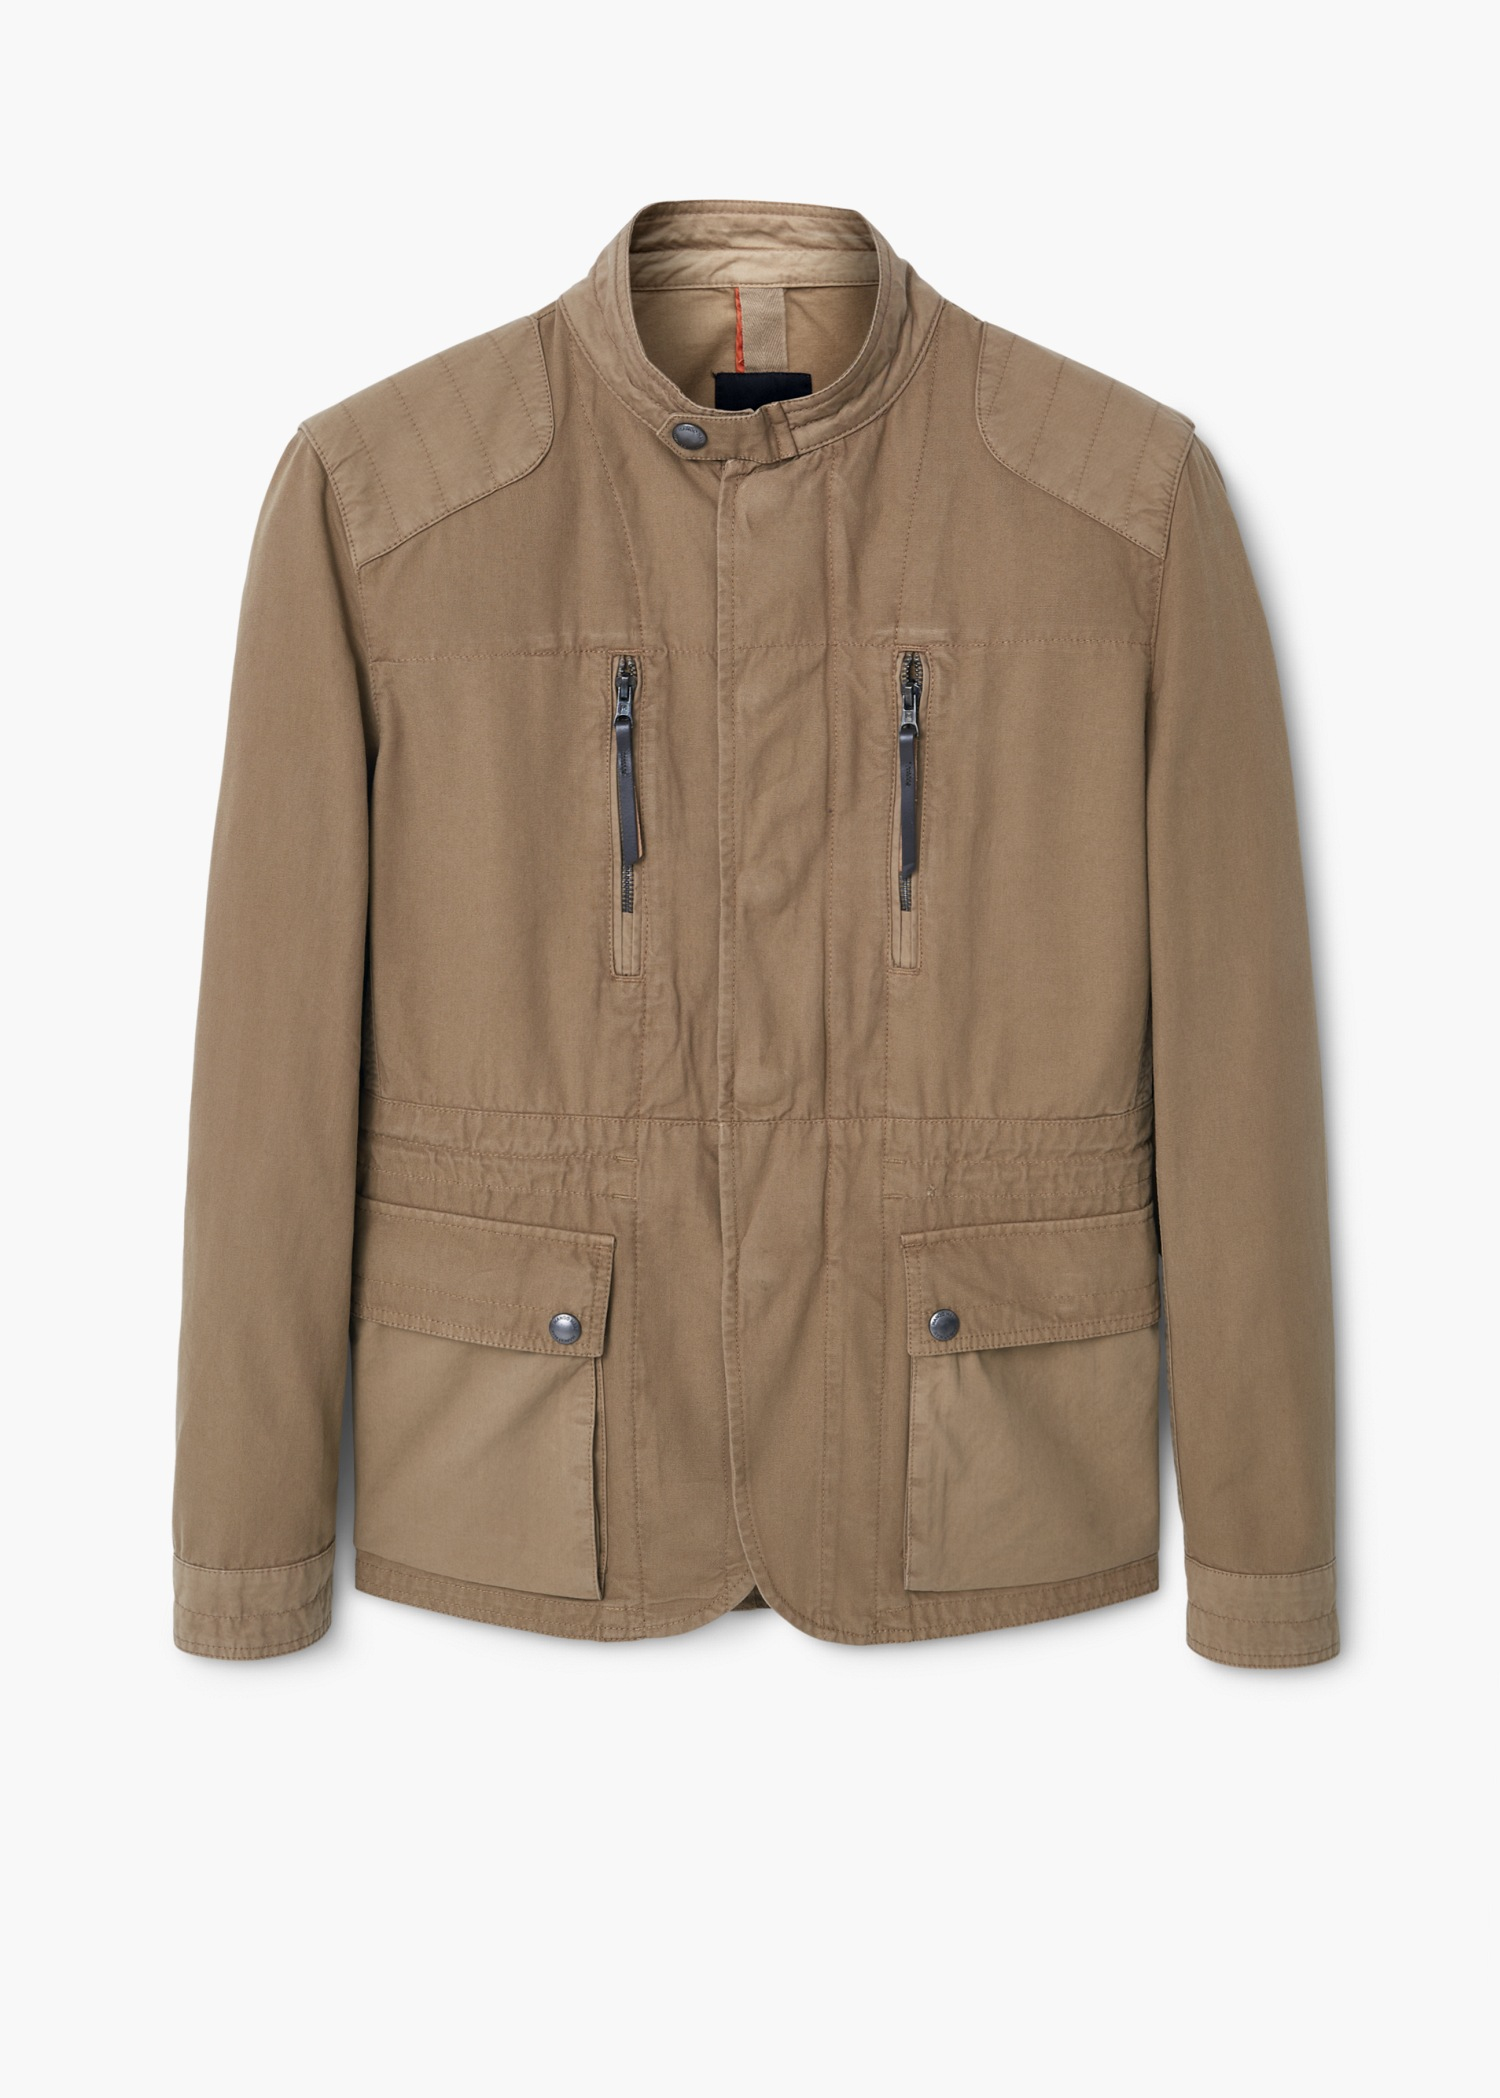 Lyst - Mango Cotton Canvas Field Jacket in Brown for Men